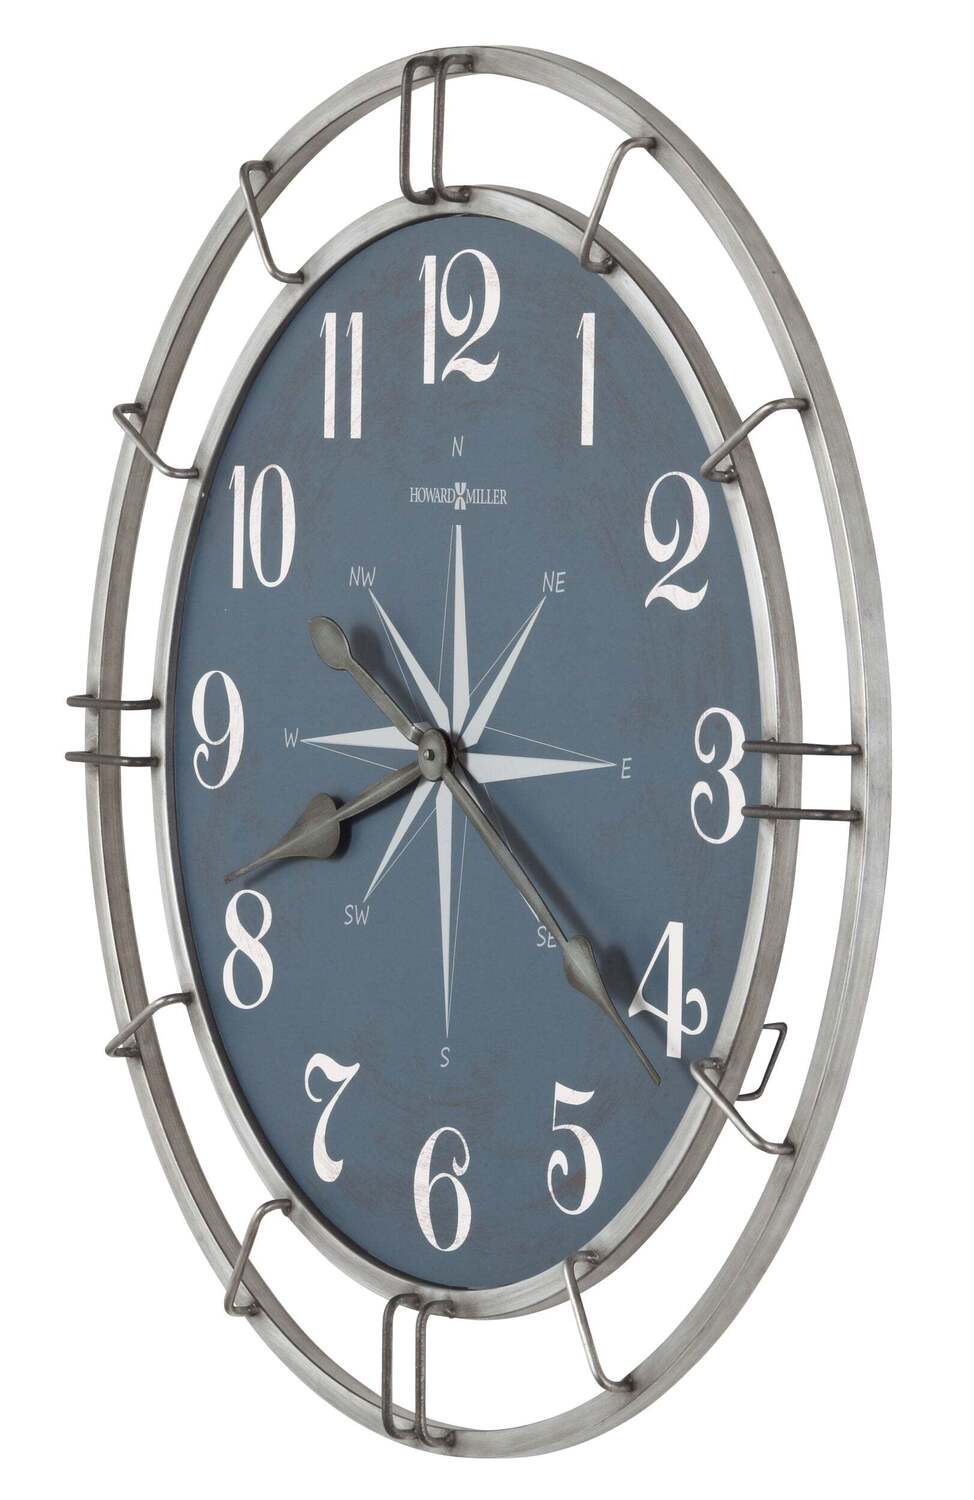 Howard Miller Compass Dial Gallery Wall Clock 625744 625744